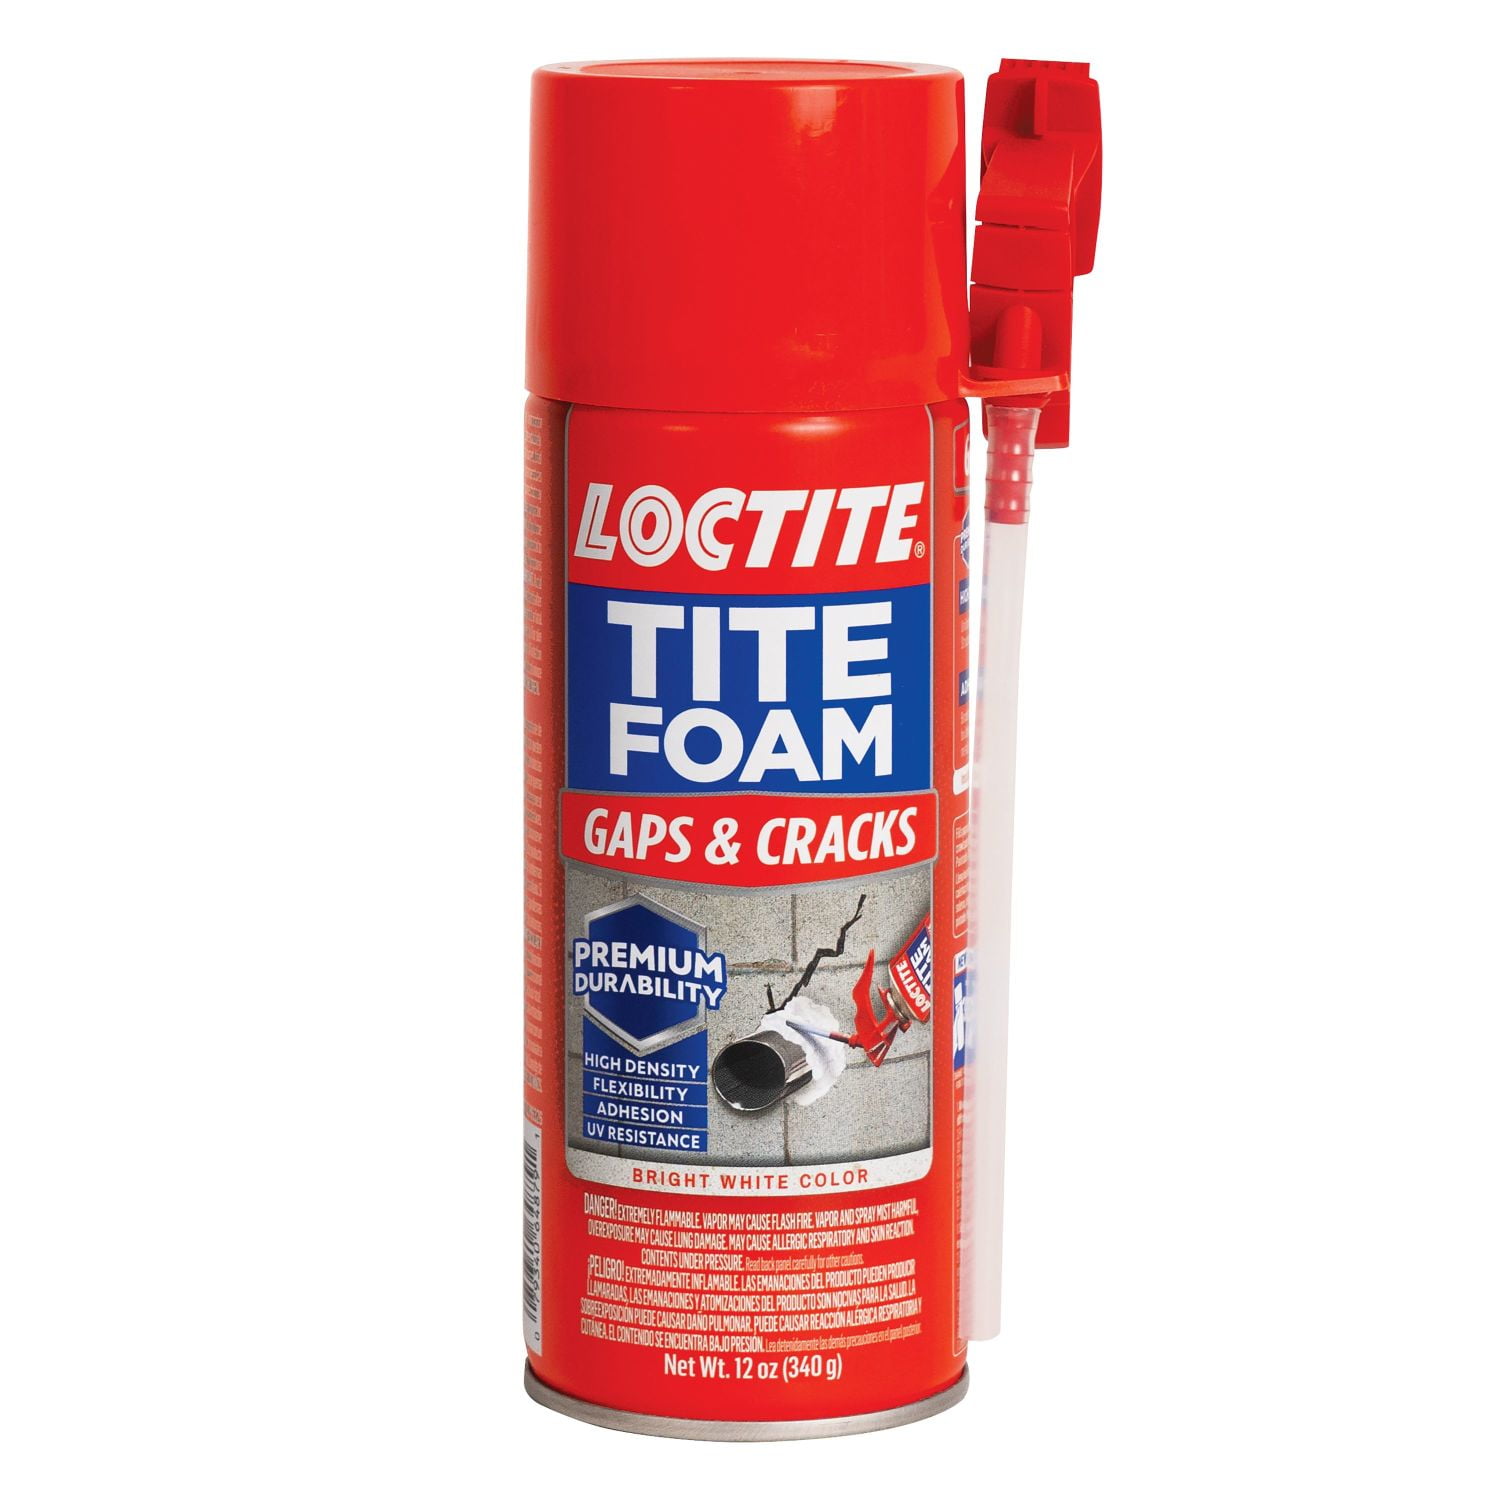 Loctite Tite Foam Insulating Foam Sealant Gaps & Cracks, 1, White 12 fl oz Can